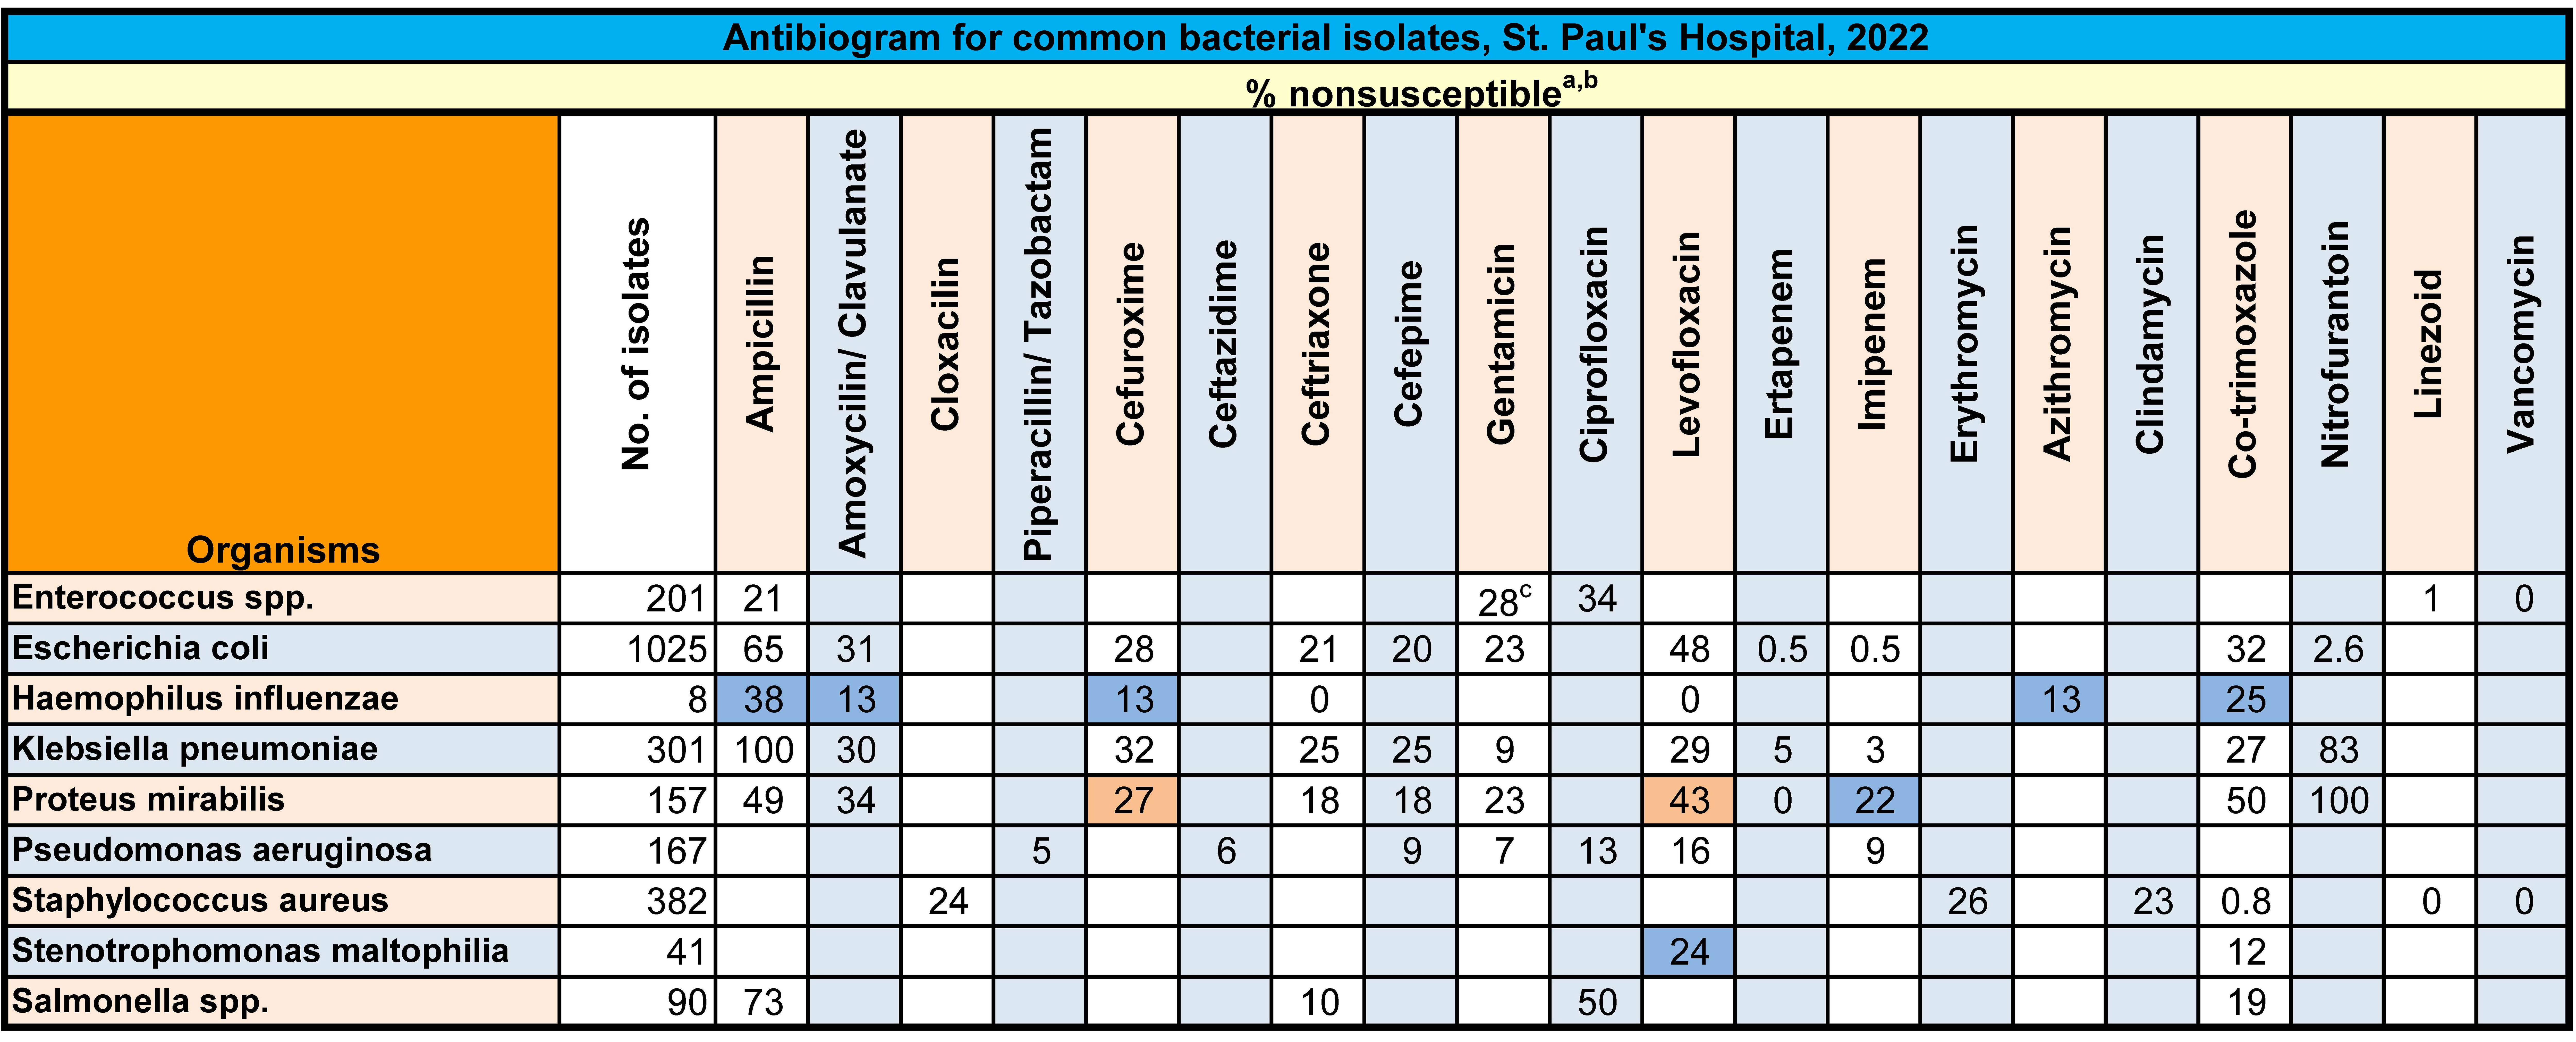 Table StPaul. Antibiogram for common bacterial isolates, St. Paul's Hospital, 2022